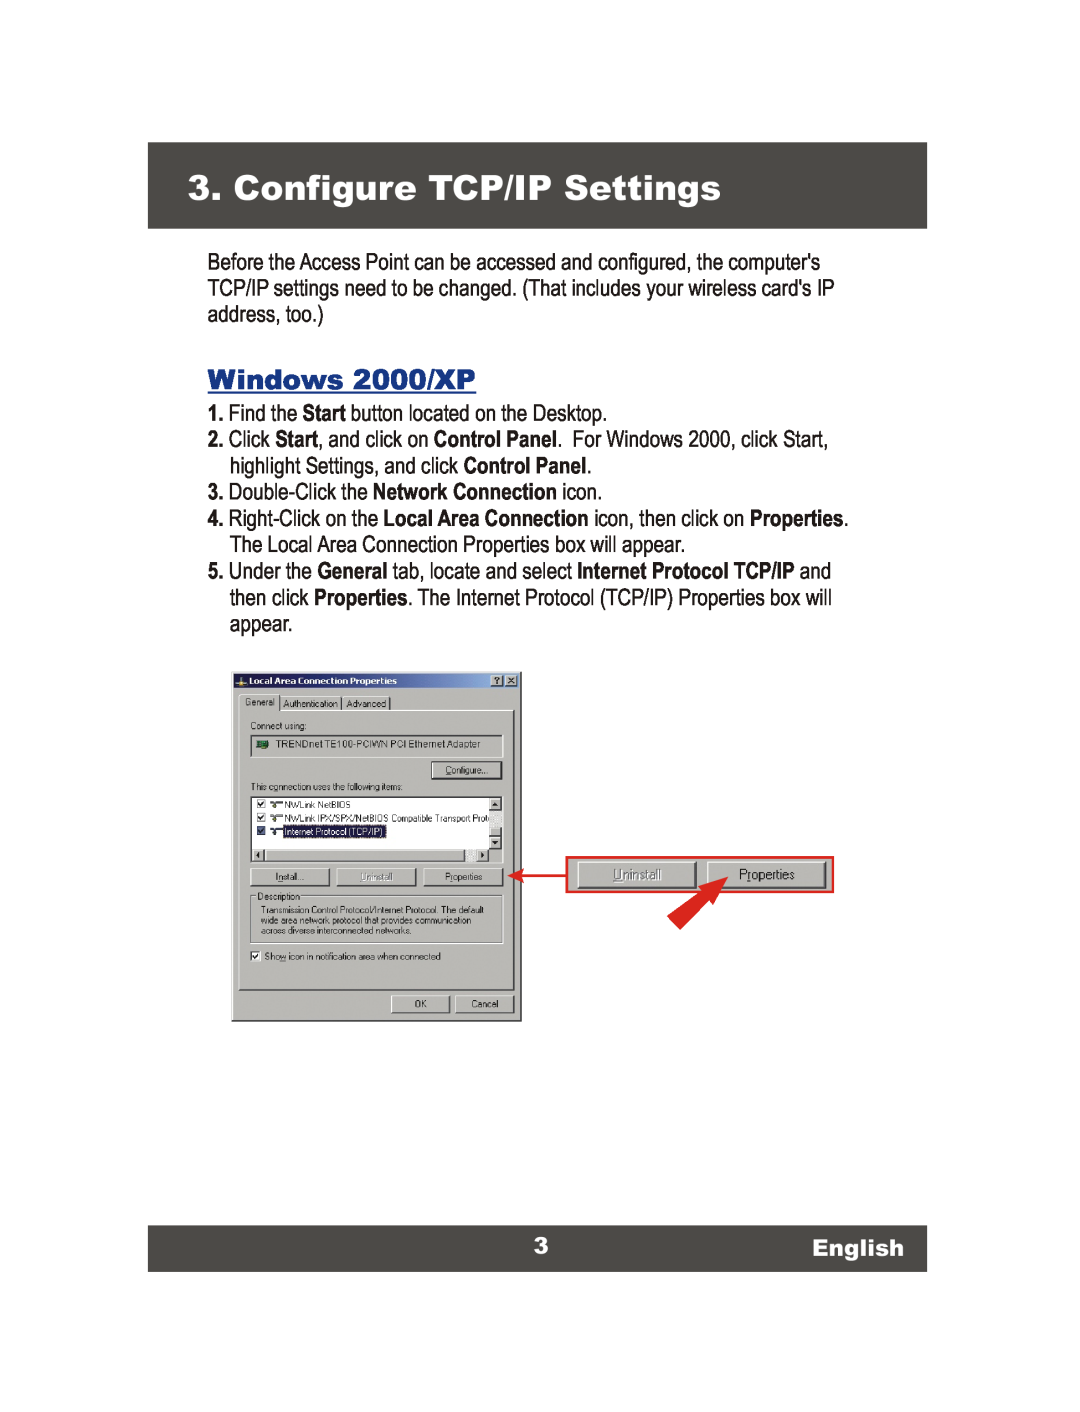 TRENDnet TEW-610APB, Wireless Access Point manual Configure TCP/IP Settings, Windows 2000/XP, 3English 